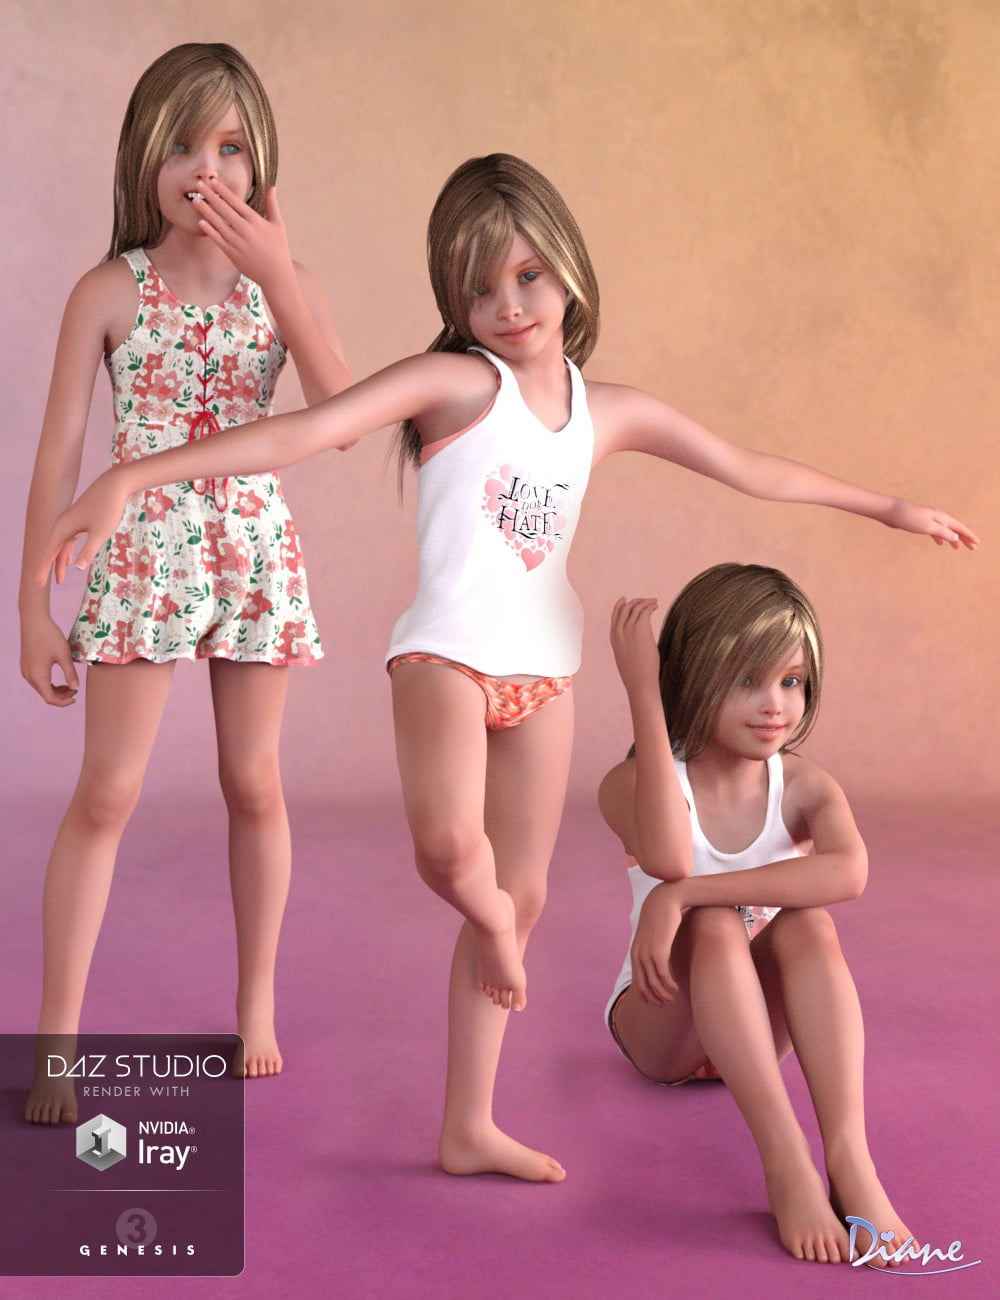 Adorbs Poses For Skyler And Genesis 3 Female S ⋆ Freebies Daz 3d